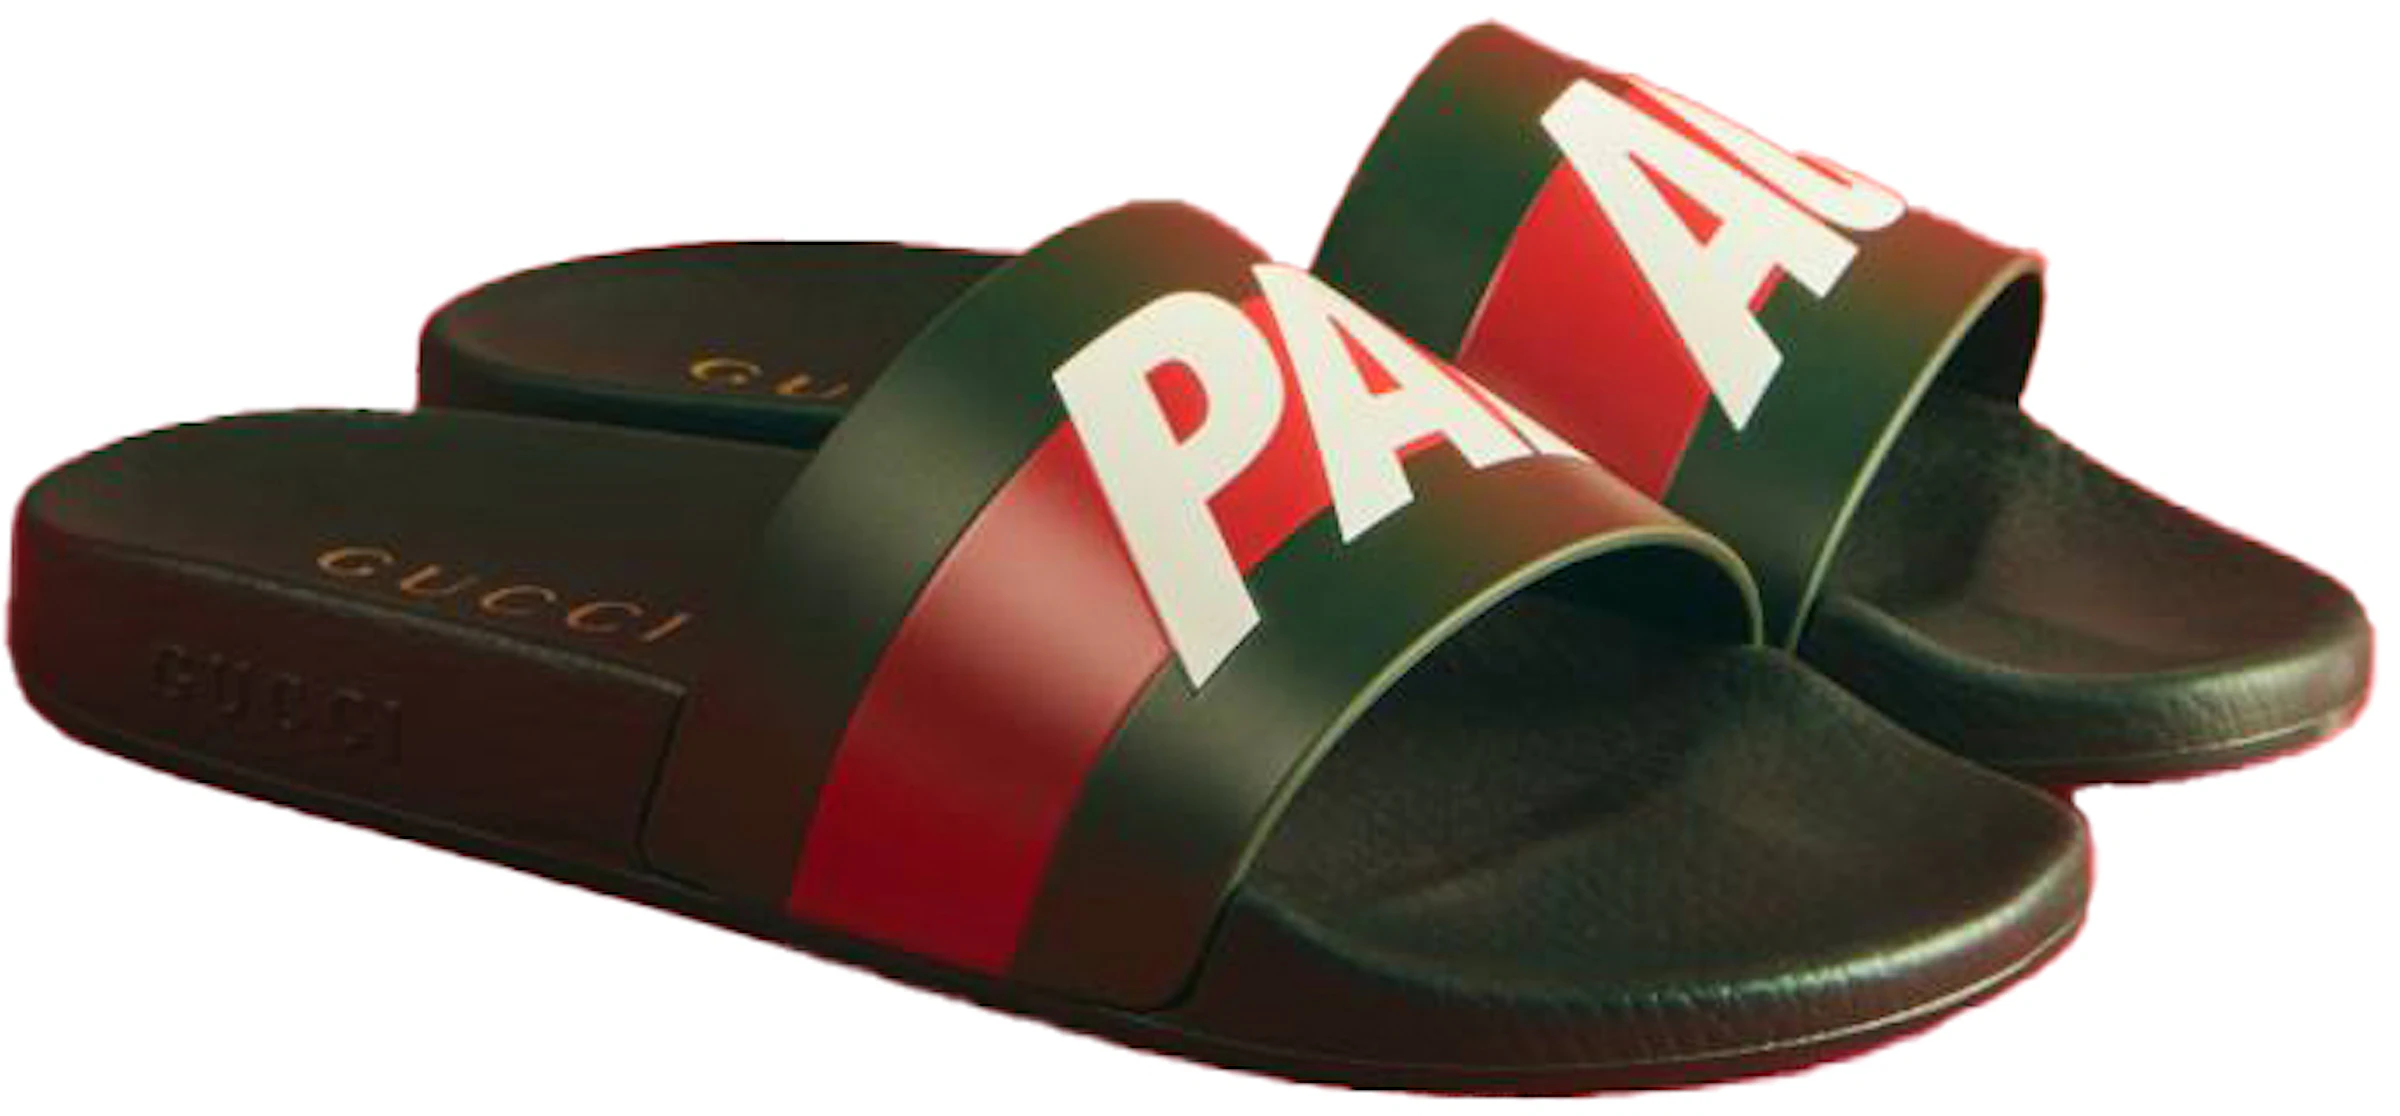 Palace x Gucci Logo Web Slide Sandal Black - 723353 9AAAF 8818 - US